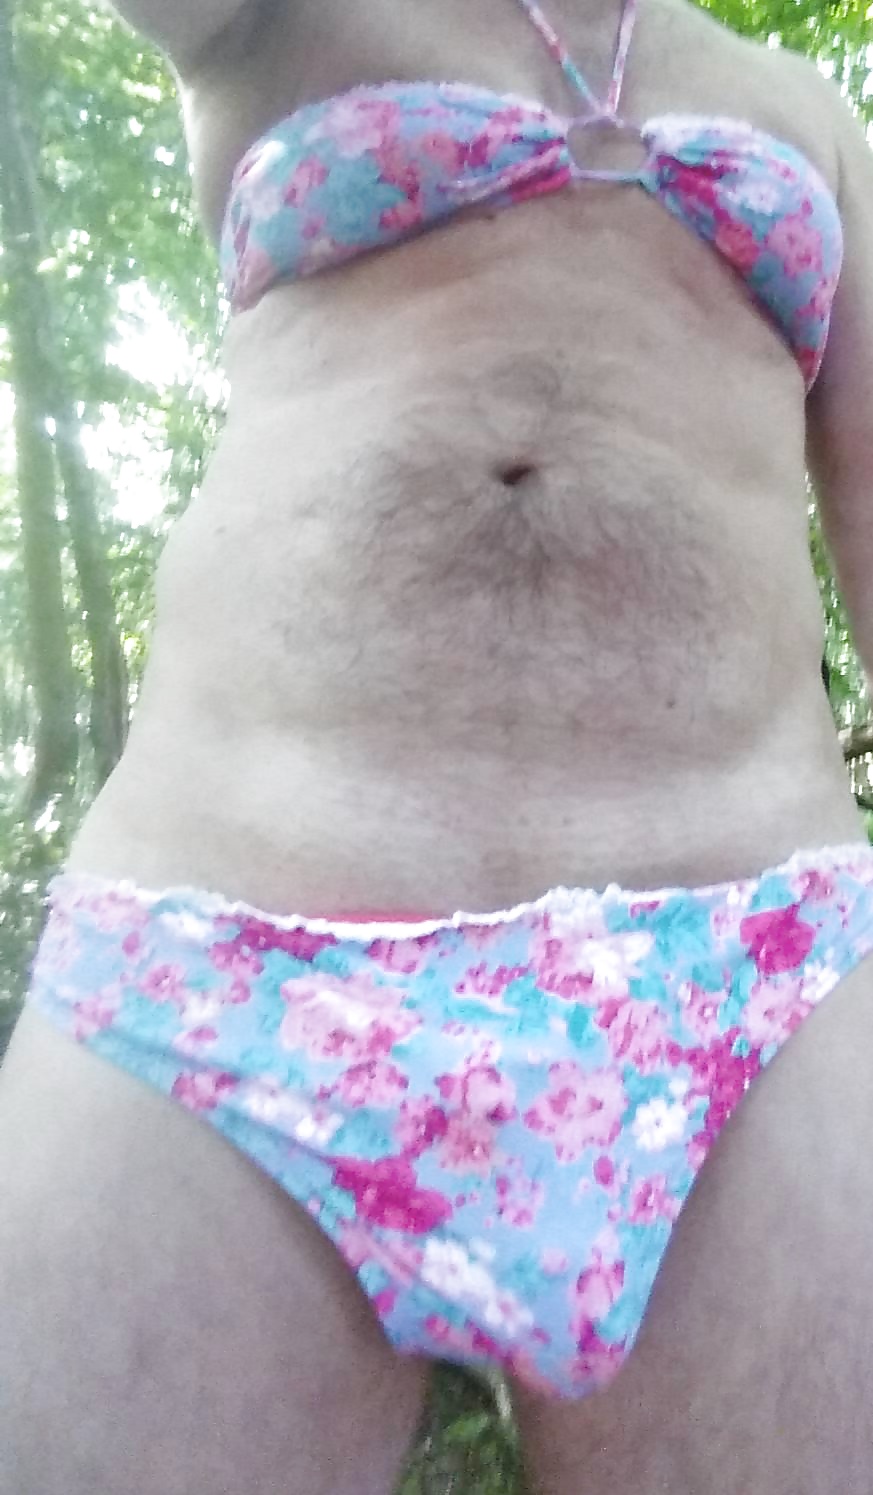 Sissy jayne tan cachonda por su nuevo bikini rosa que babea
 #32769564